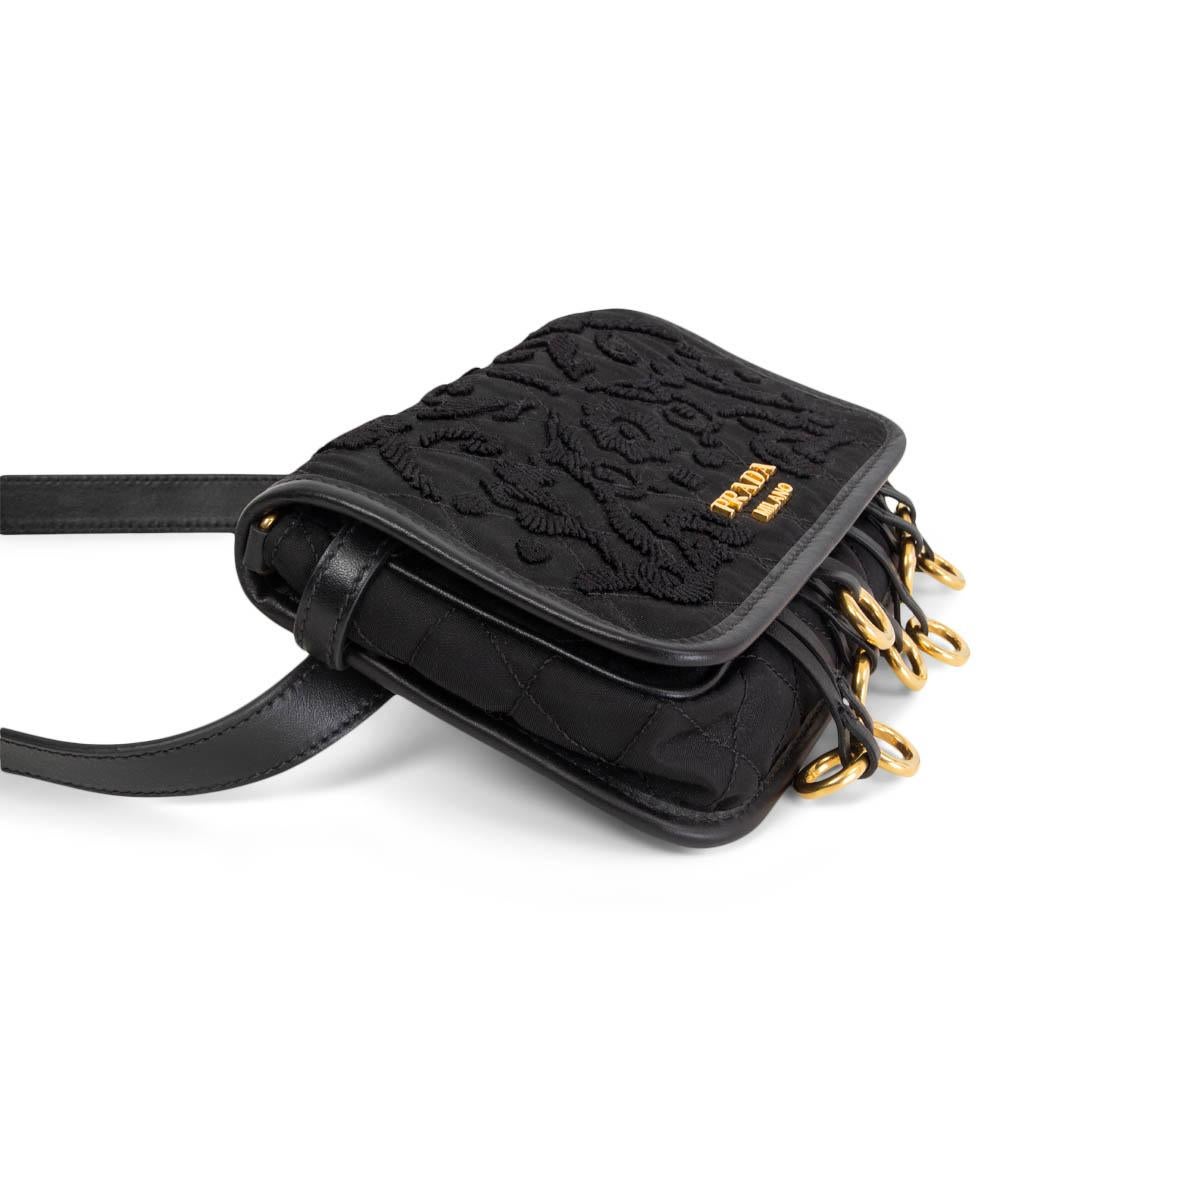 PRADA black nylon 2017 FLORAL CORSAIRE Belt Bag In Excellent Condition For Sale In Zürich, CH